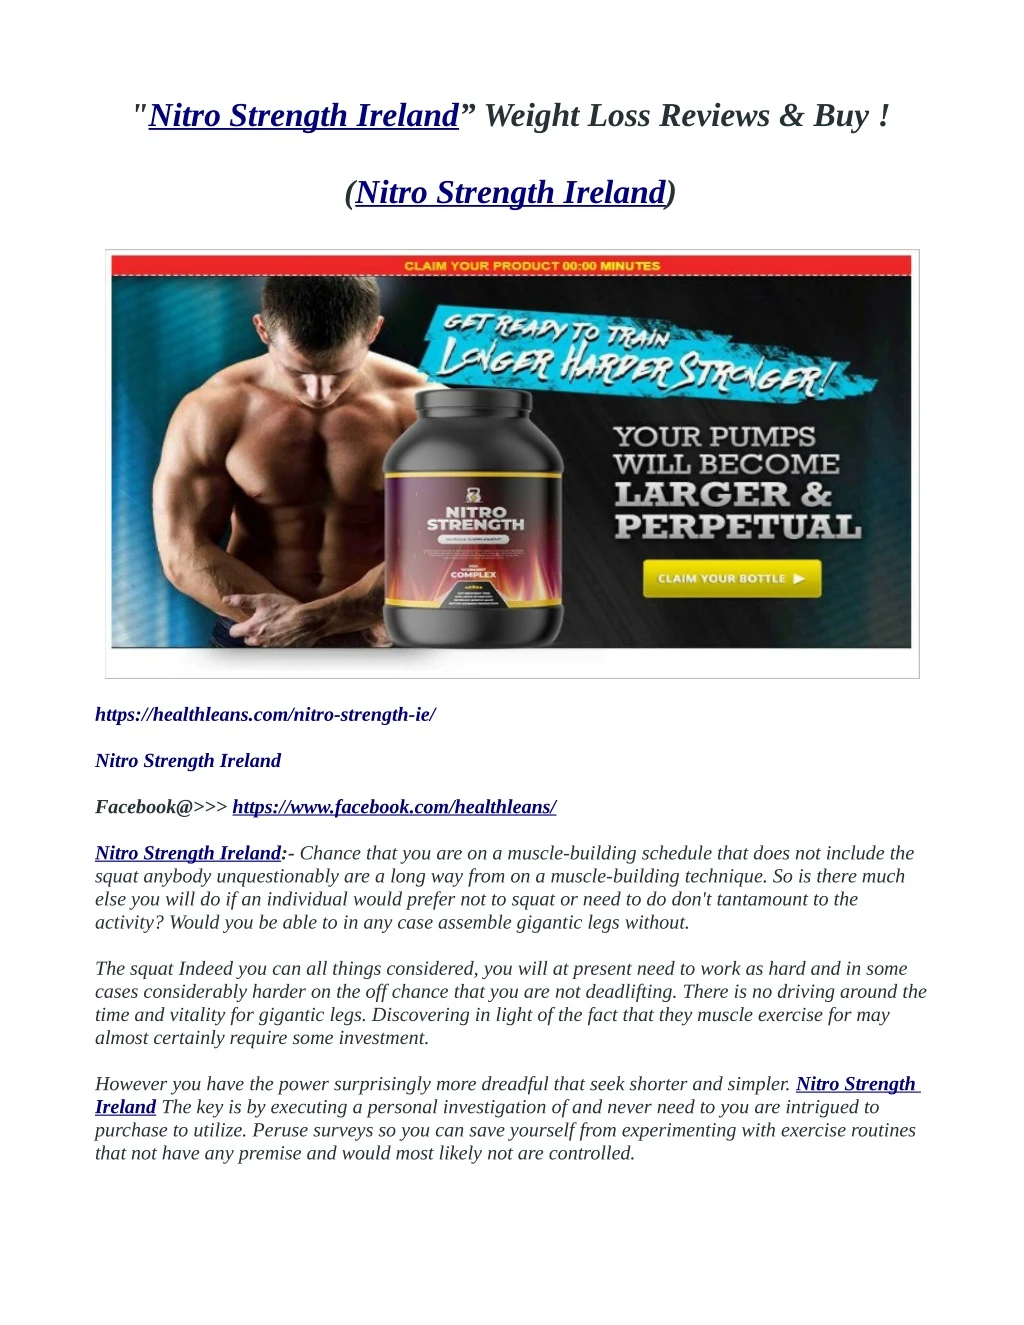 nitro strength ireland weight loss reviews buy